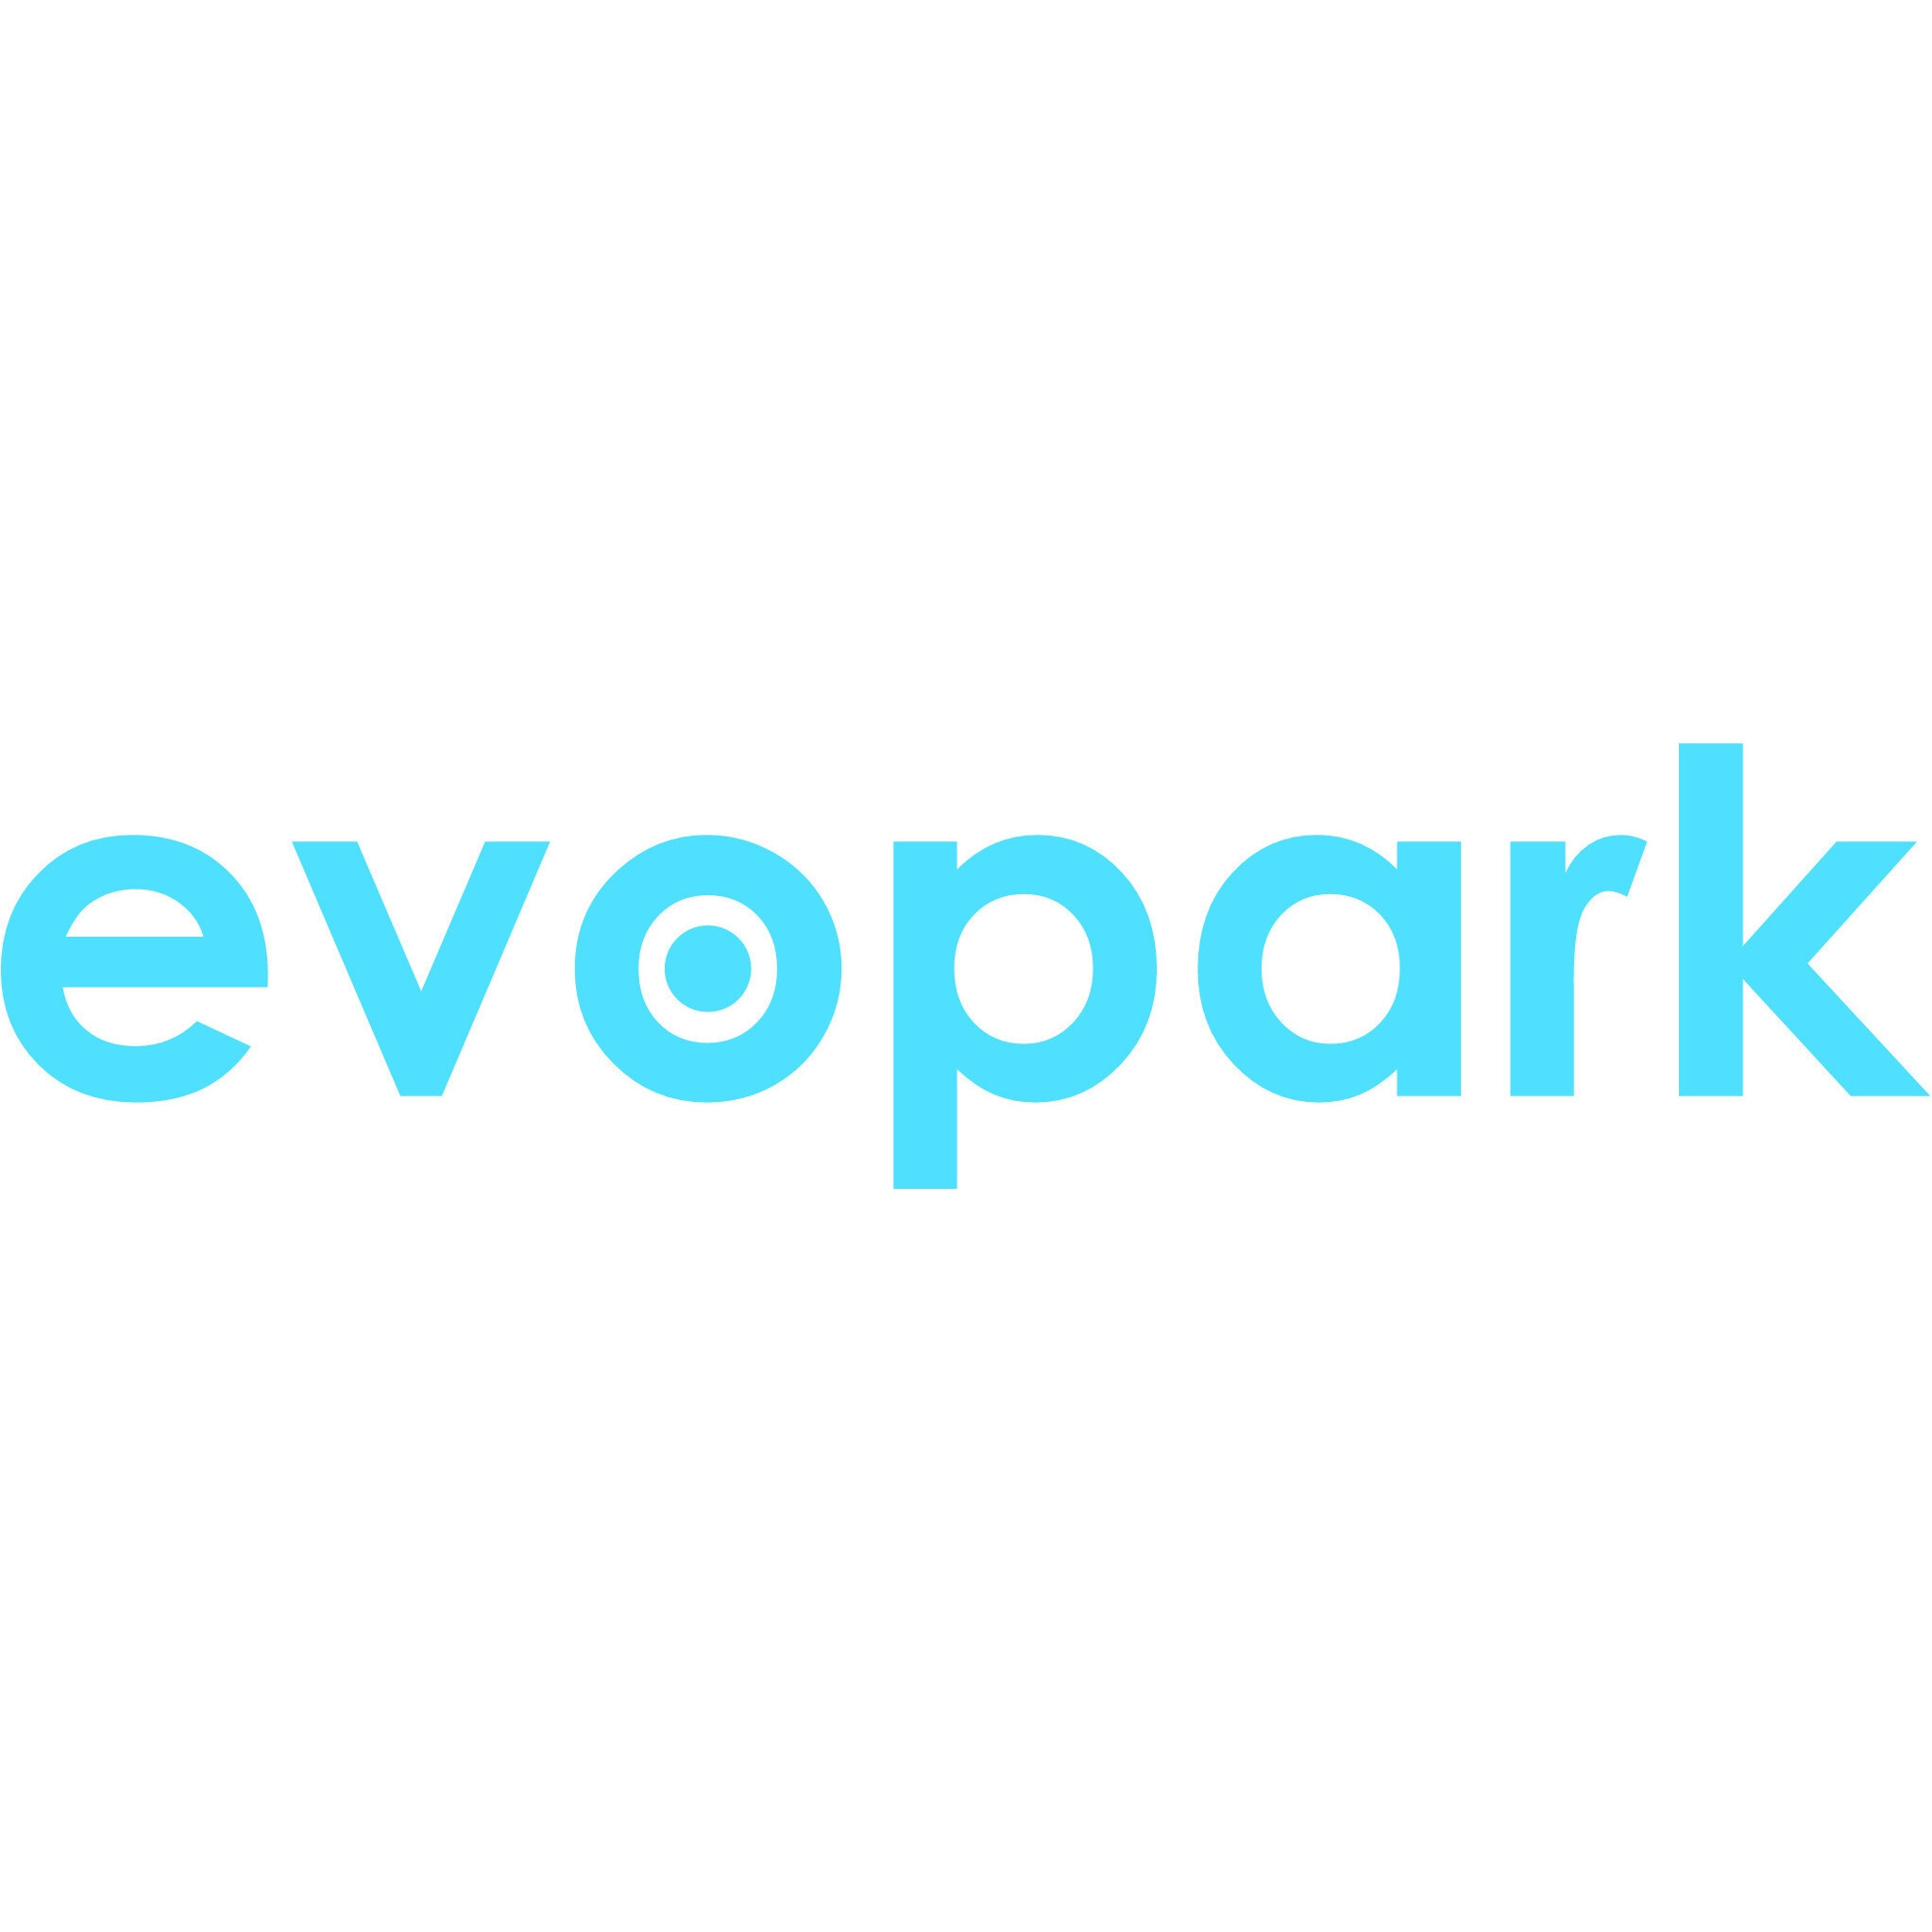 evopark GmbH